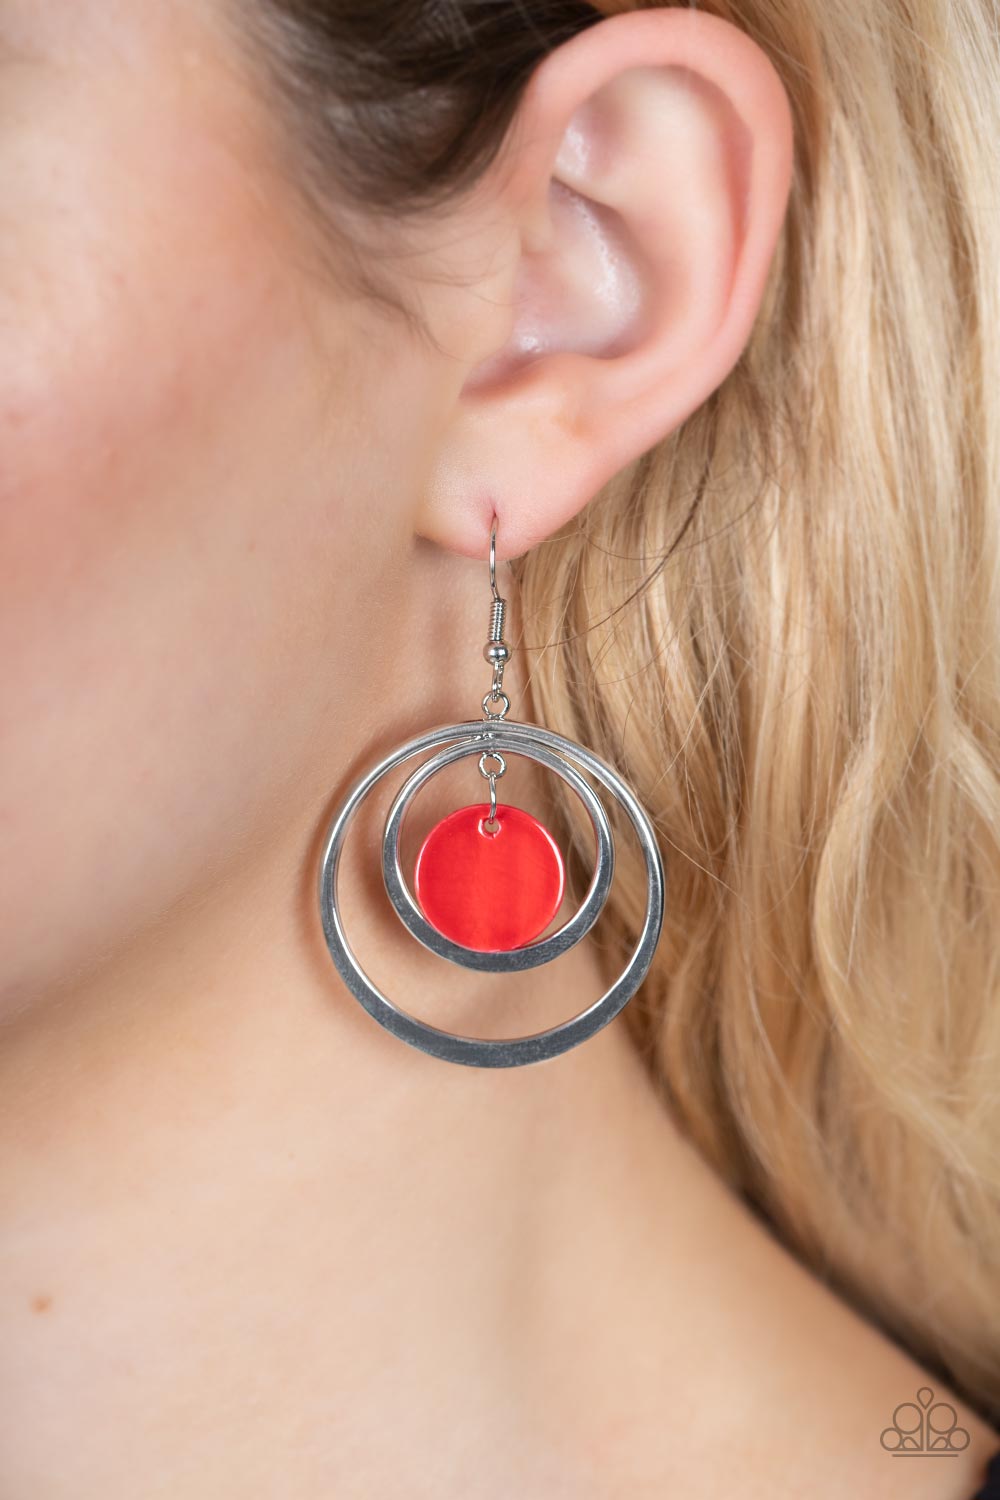 Mai Tai Tango Red Earrings - Paparazzi Accessories-on model - CarasShop.com - $5 Jewelry by Cara Jewels